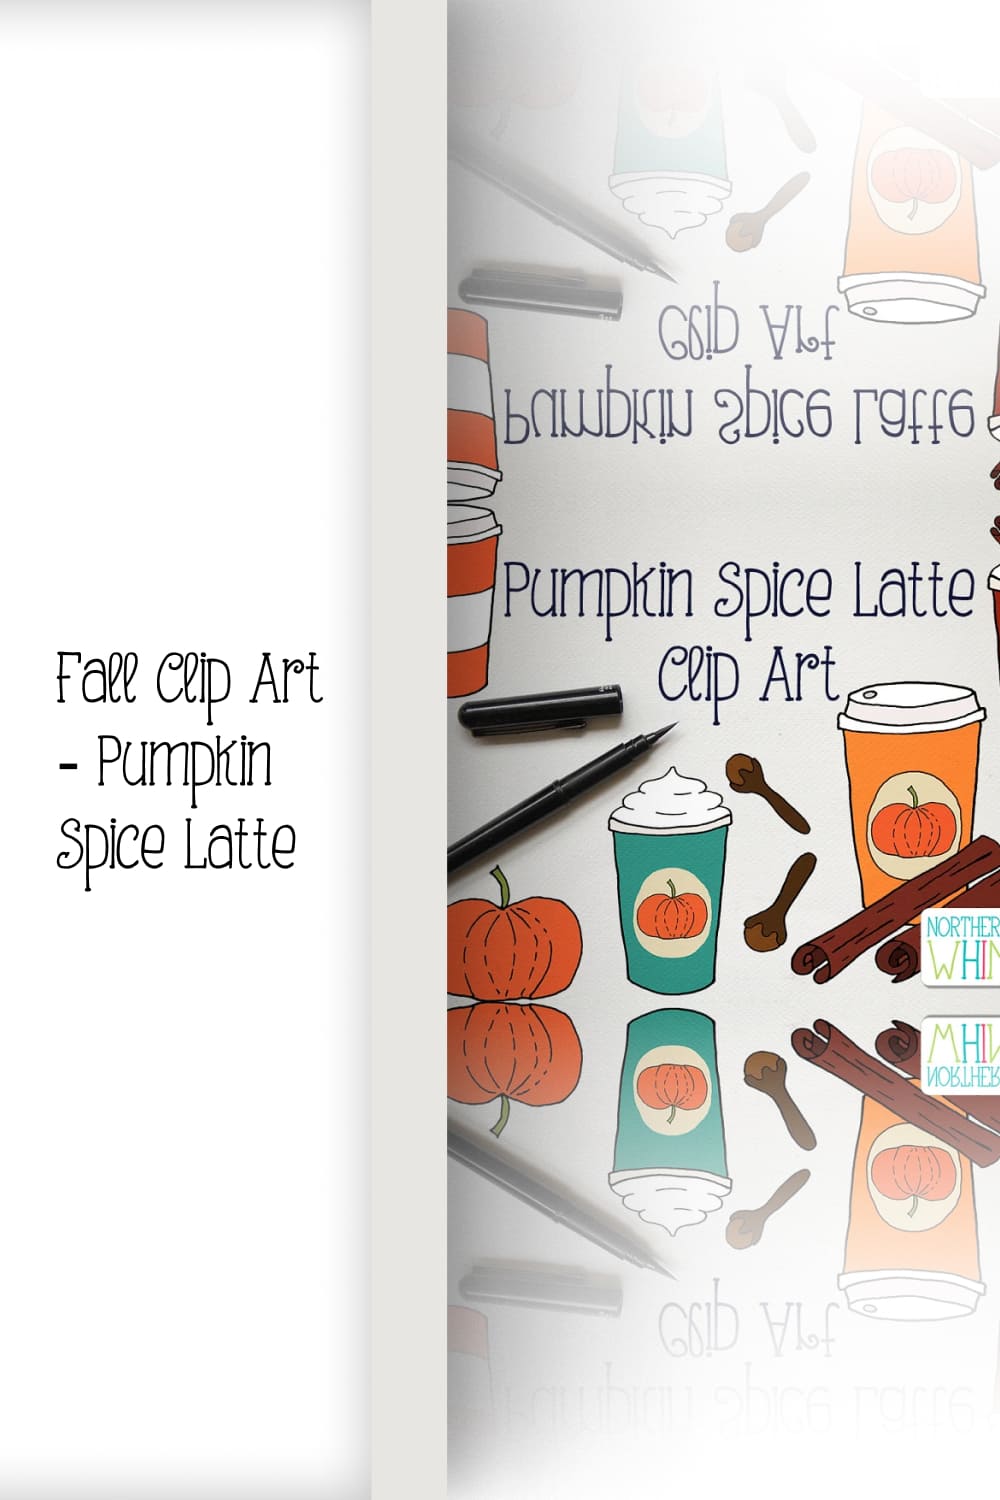 Fall Clip Art - Pumpkin Spice Latte.